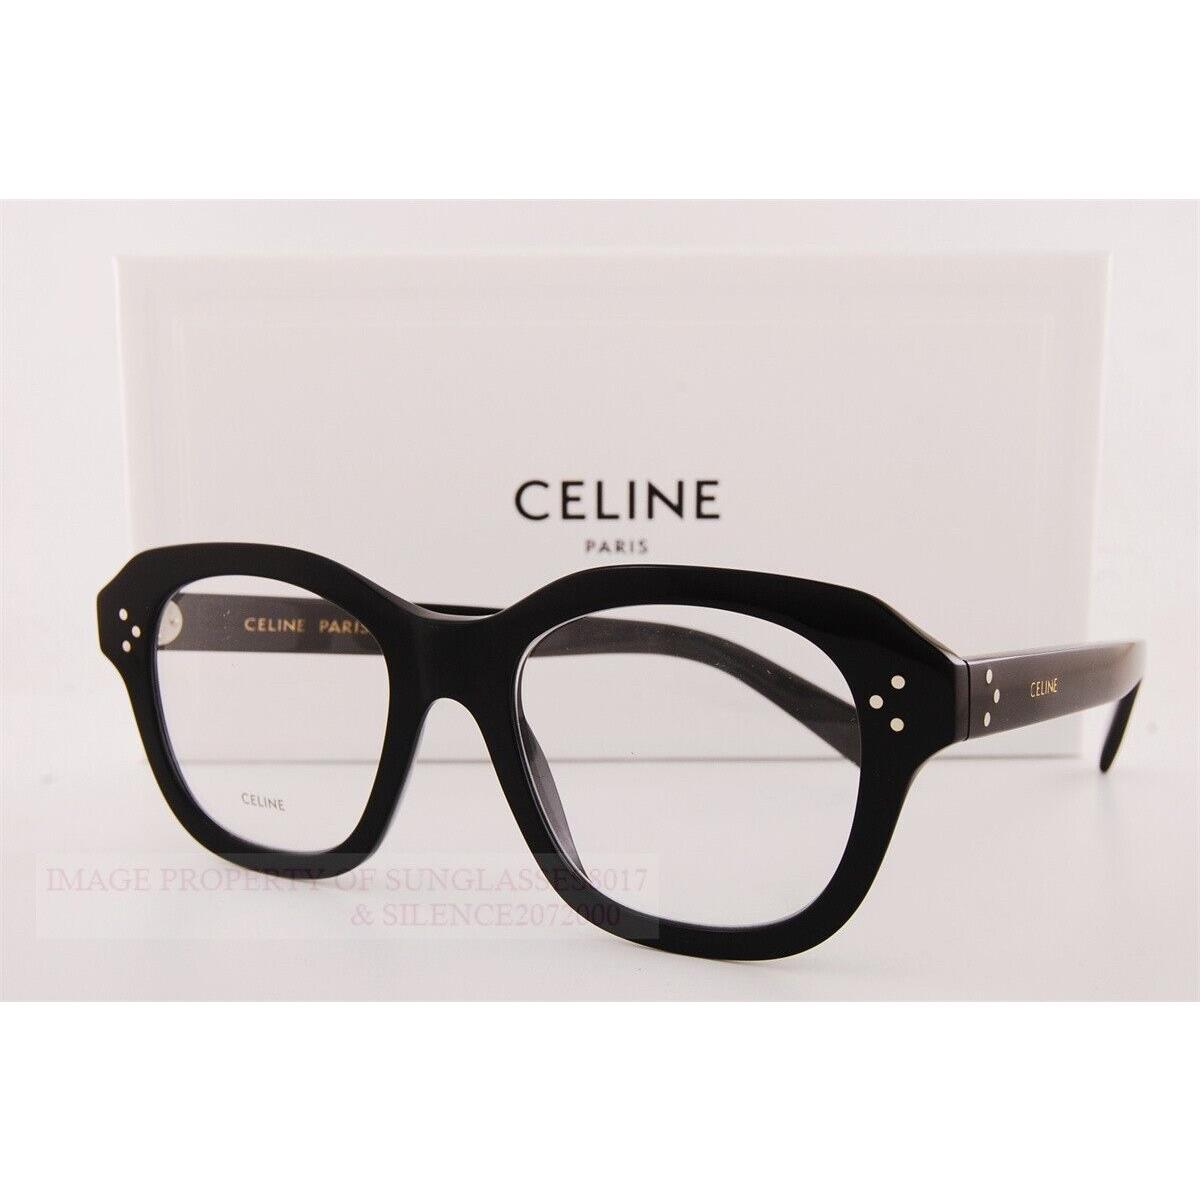 Celine Eyeglass Frames CL 50124I 001 Black For Women Size 50mm